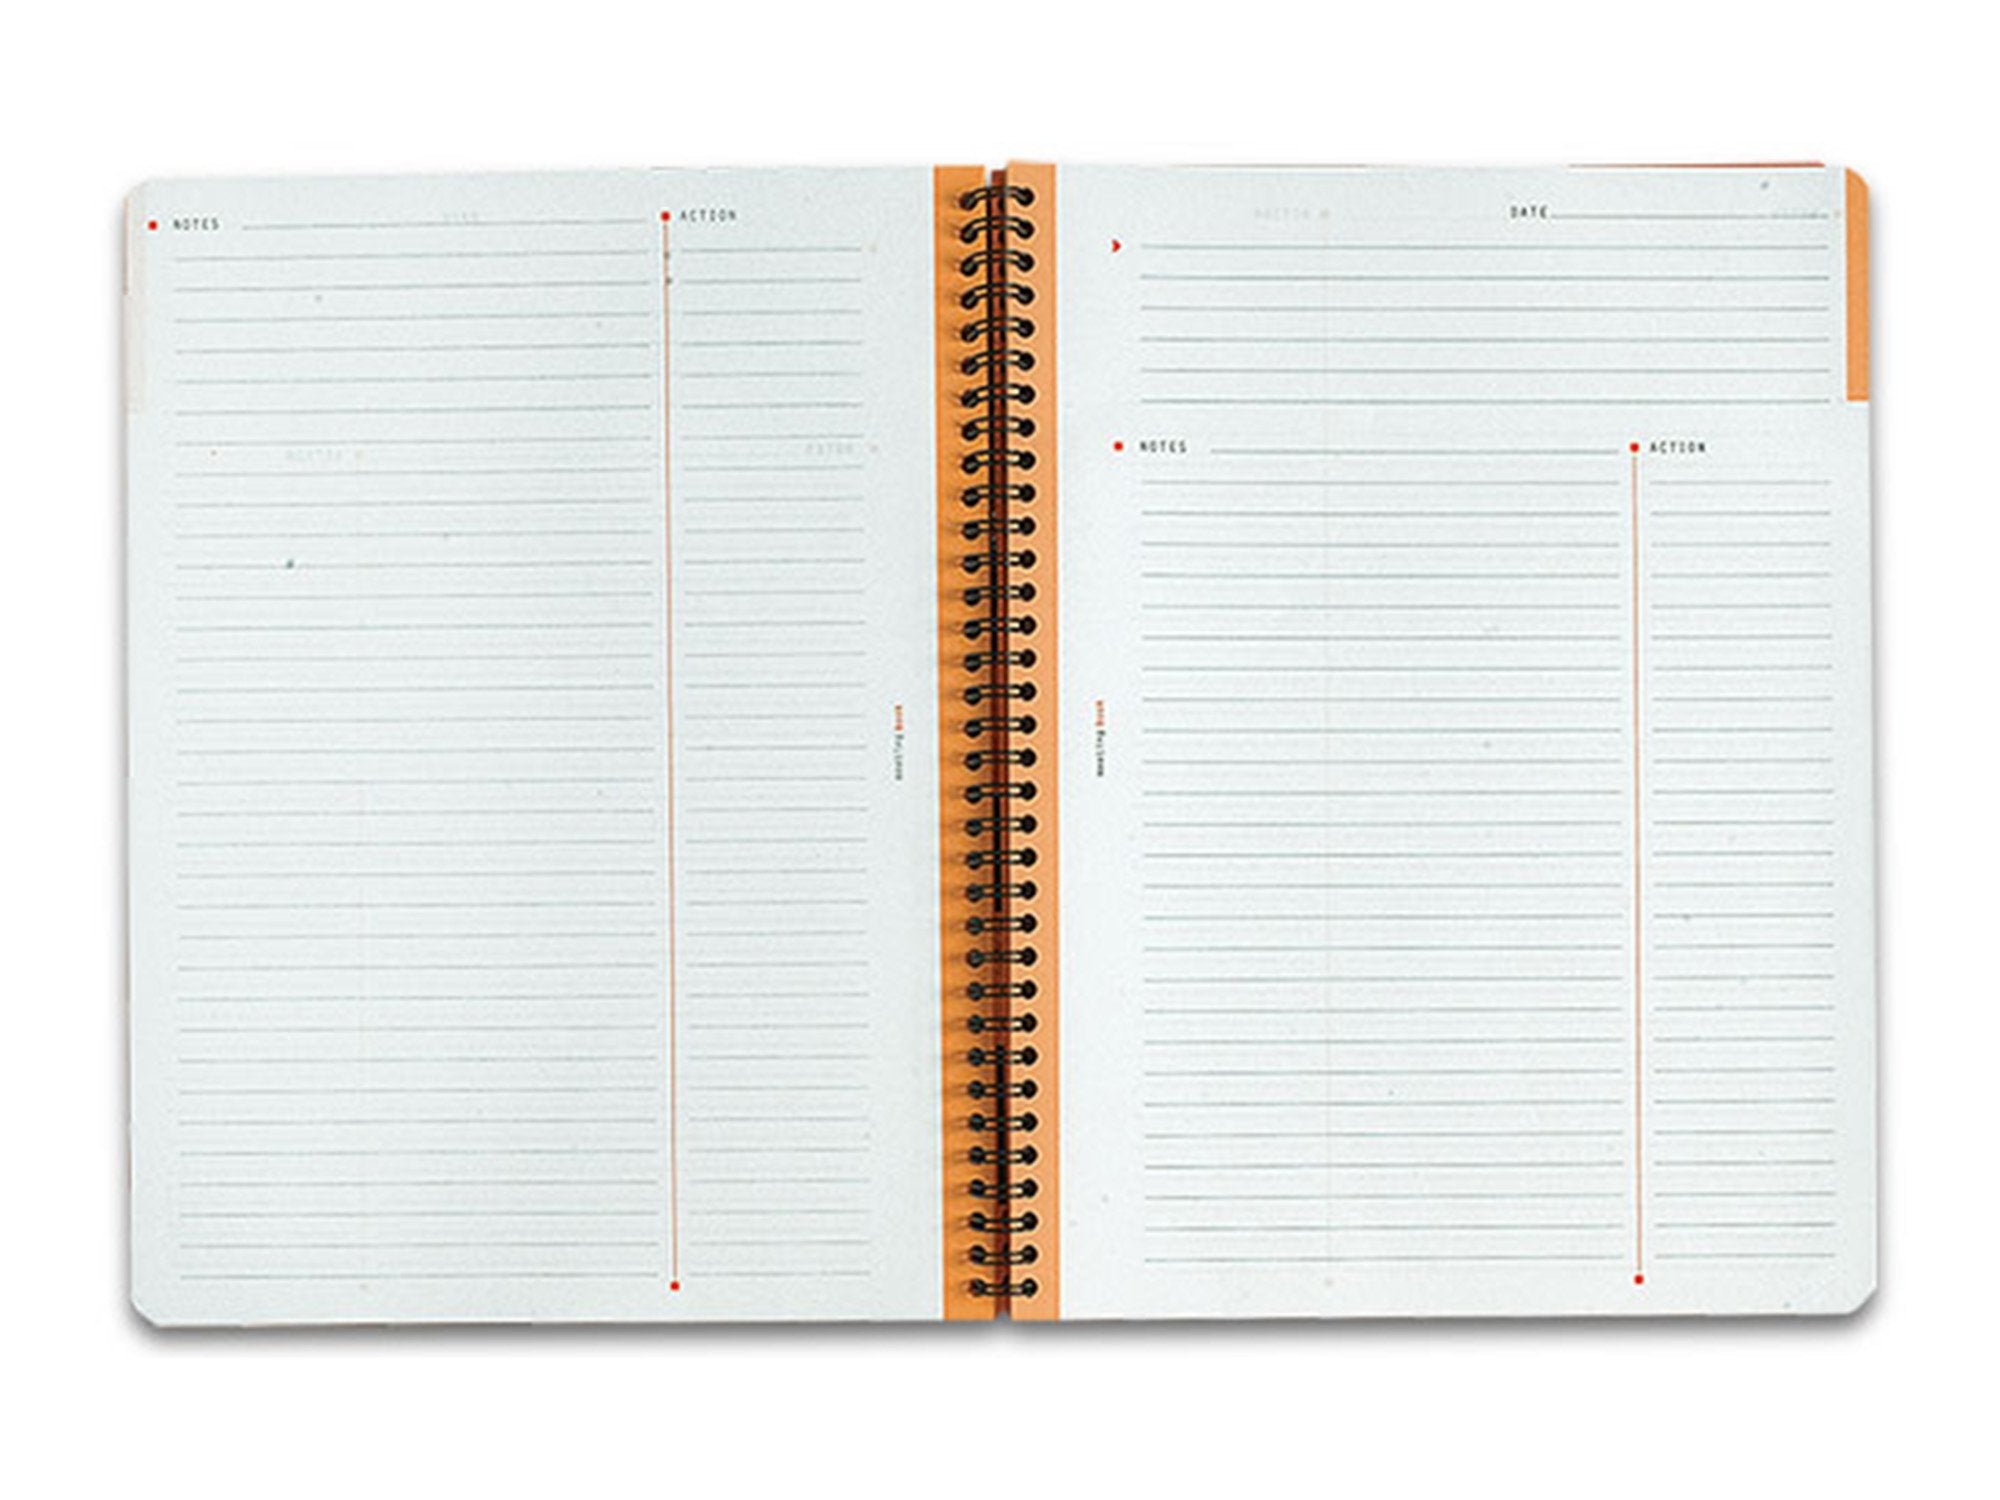 Rhodia Wirebound Pad – Jenni Bick Custom Journals